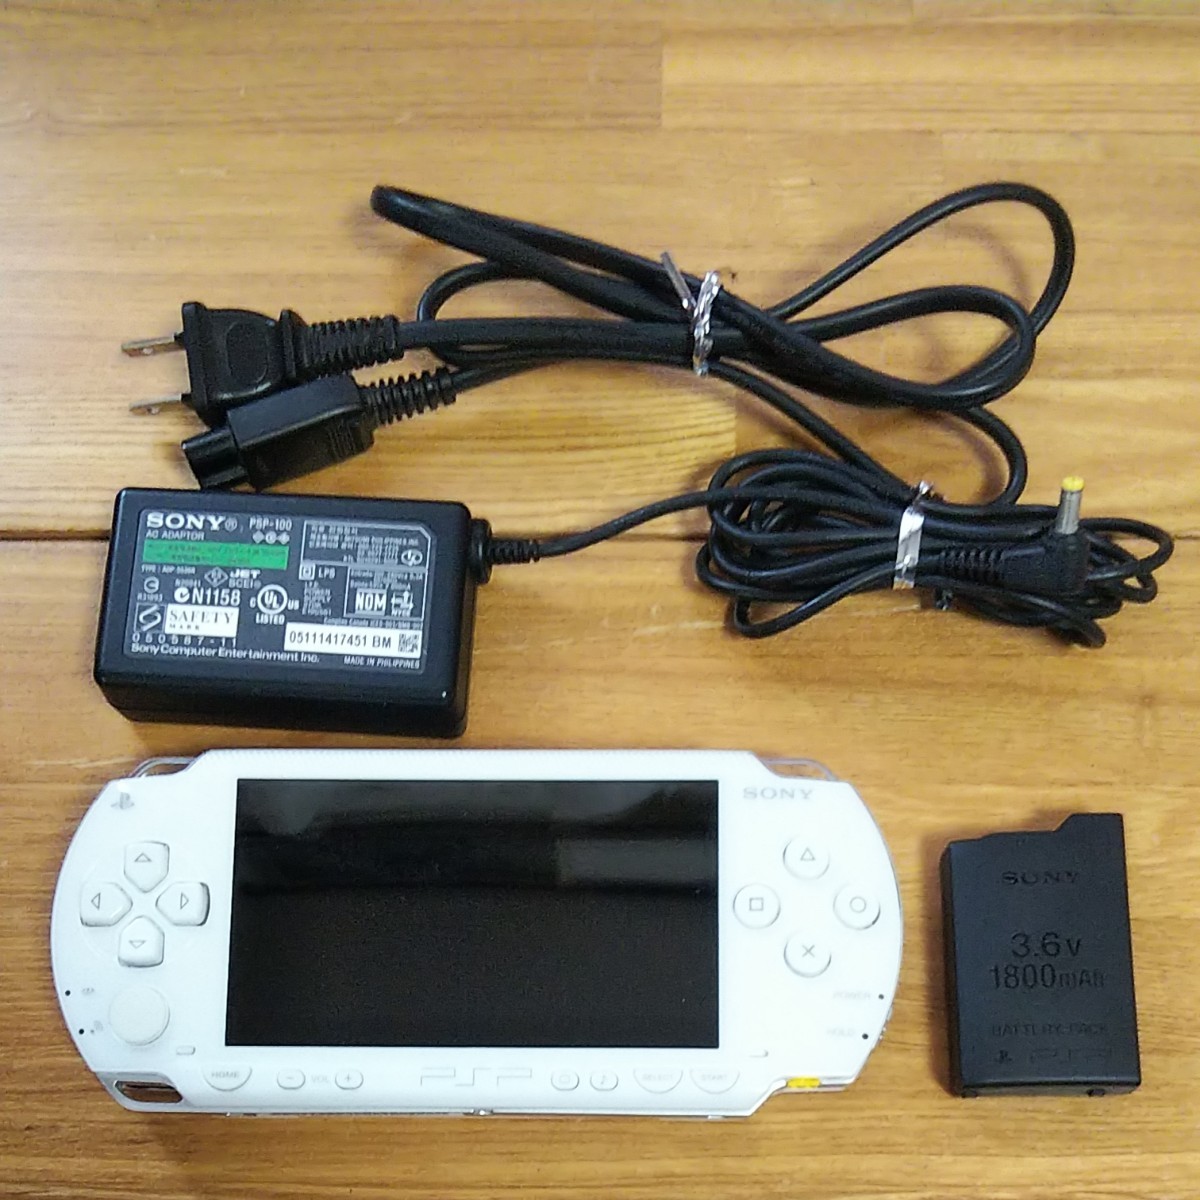 PSP-1000 本体 ホワイト